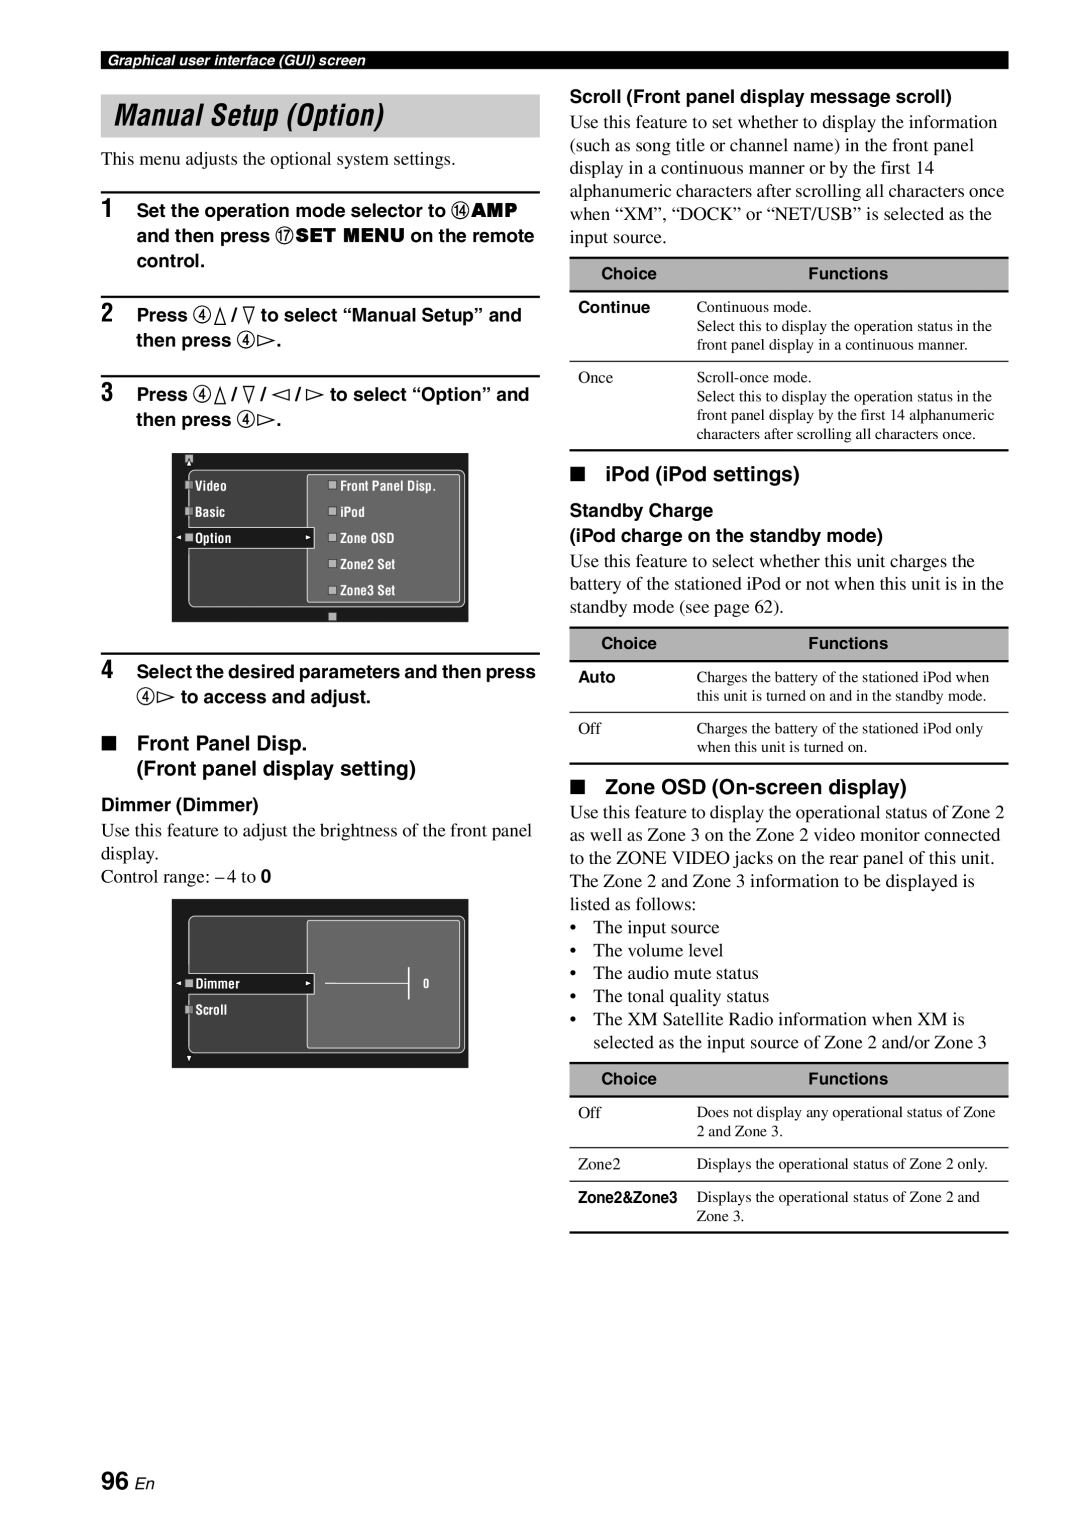 Yamaha RX-V3800 owner manual Manual Setup Option, 96 En, Front Panel Disp Front panel display setting, iPod iPod settings 